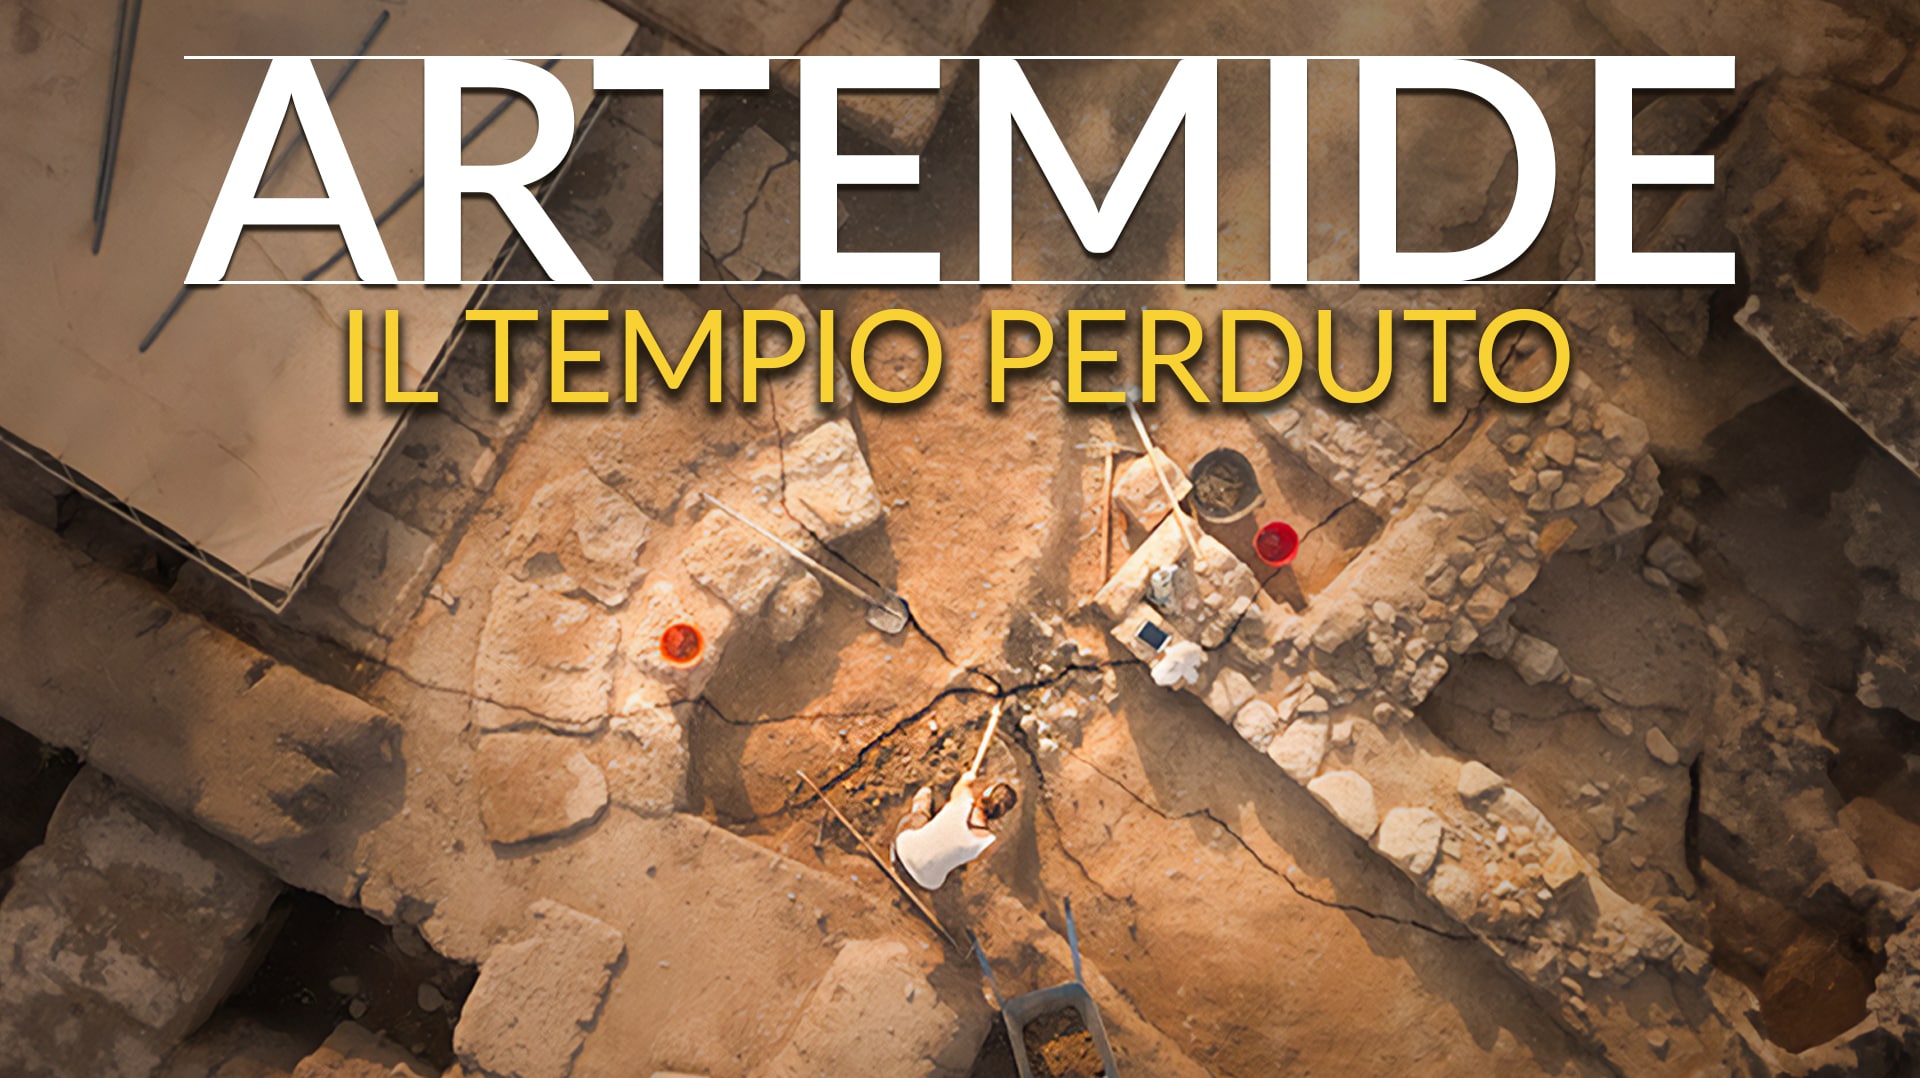 Artemide, il tempio perduto